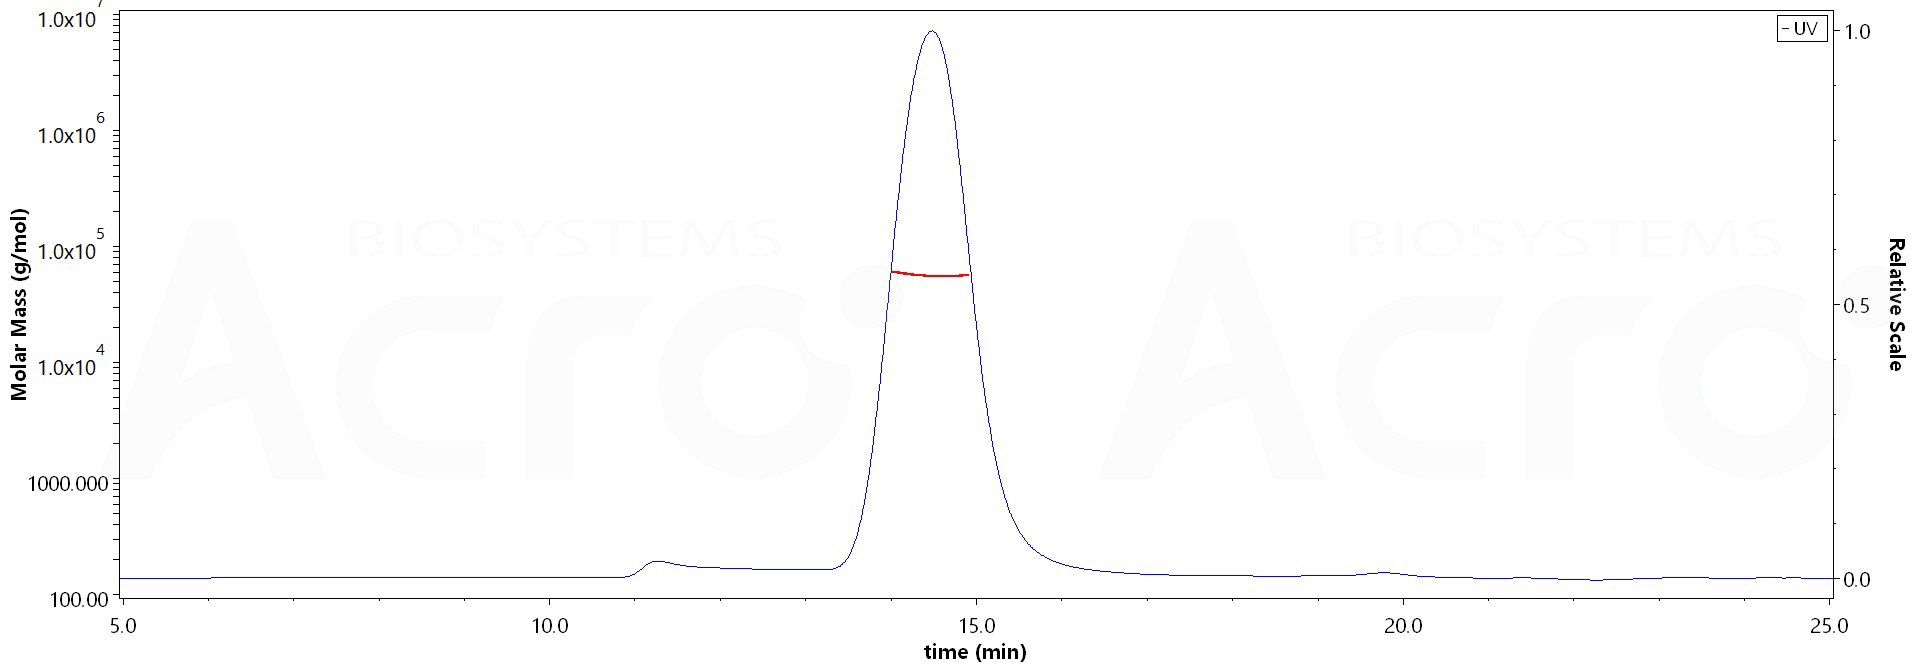 Rat FCGRT&B2M Heterodimer Protein, His Tag&Strep II Tag (Cat. No. FCM-R5287) MALS images